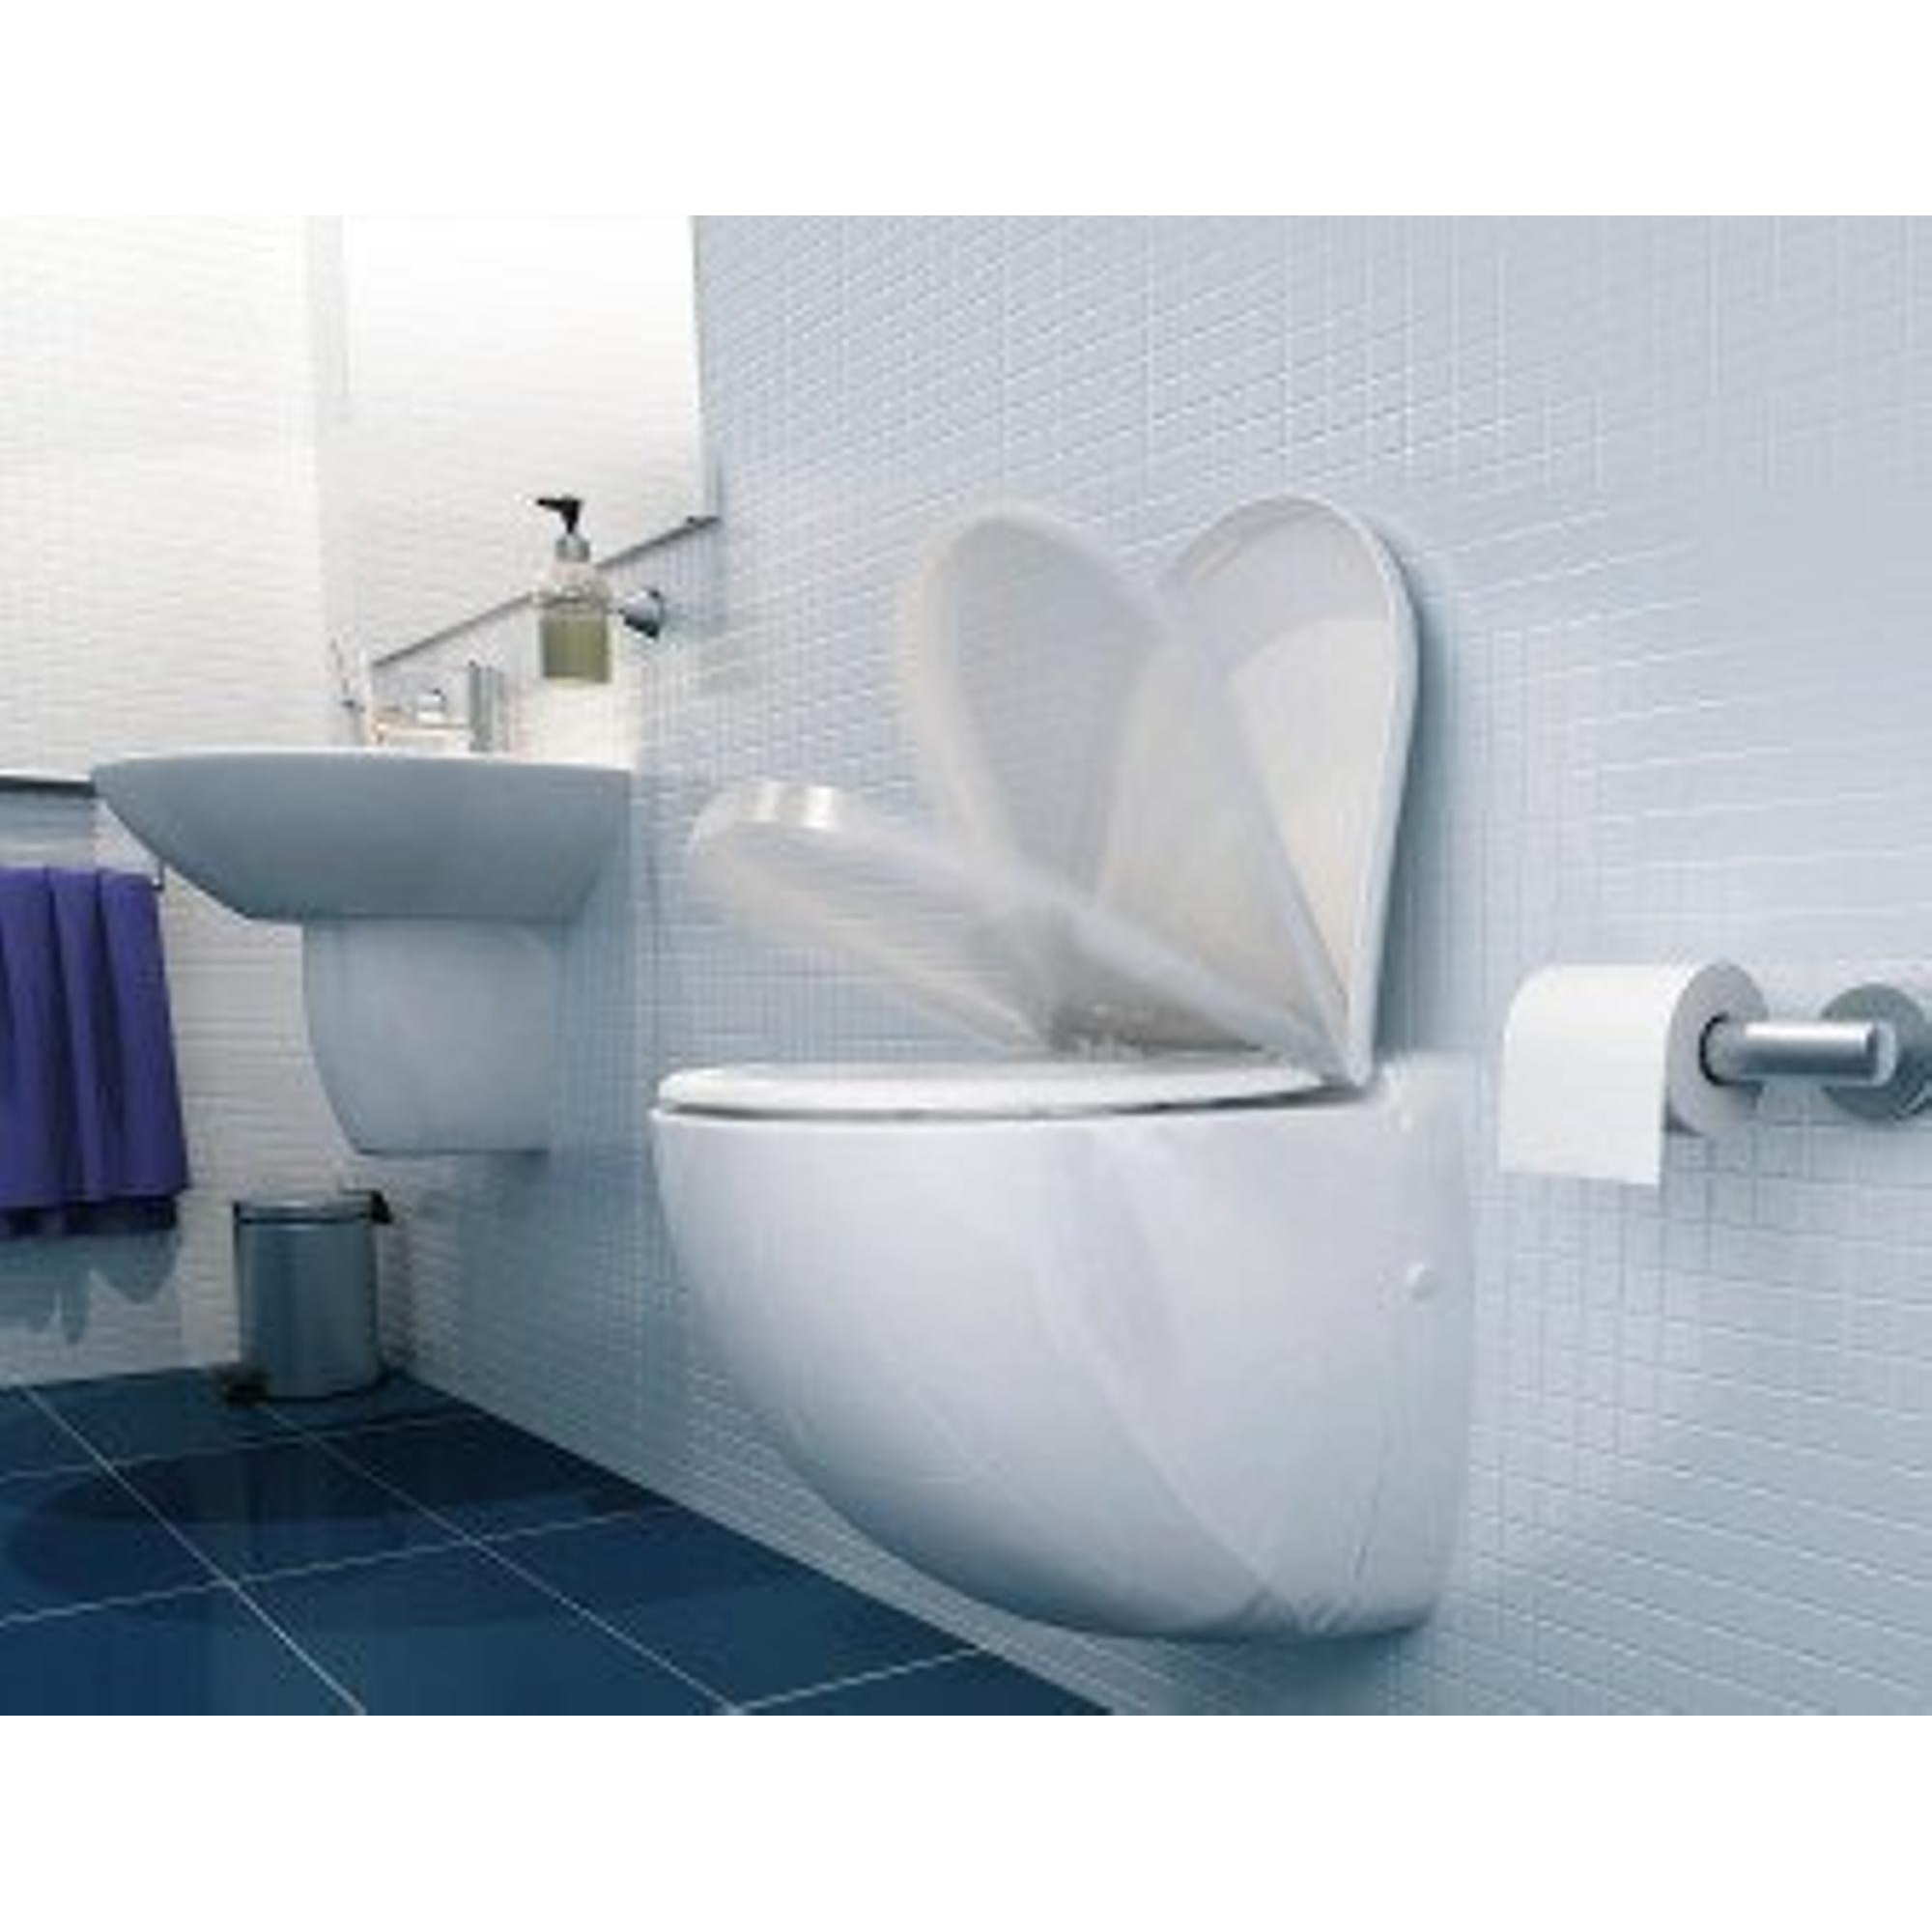 Sanibroyeur Sanicompact Comfort Broyeur sanitaire dans WC suspendu